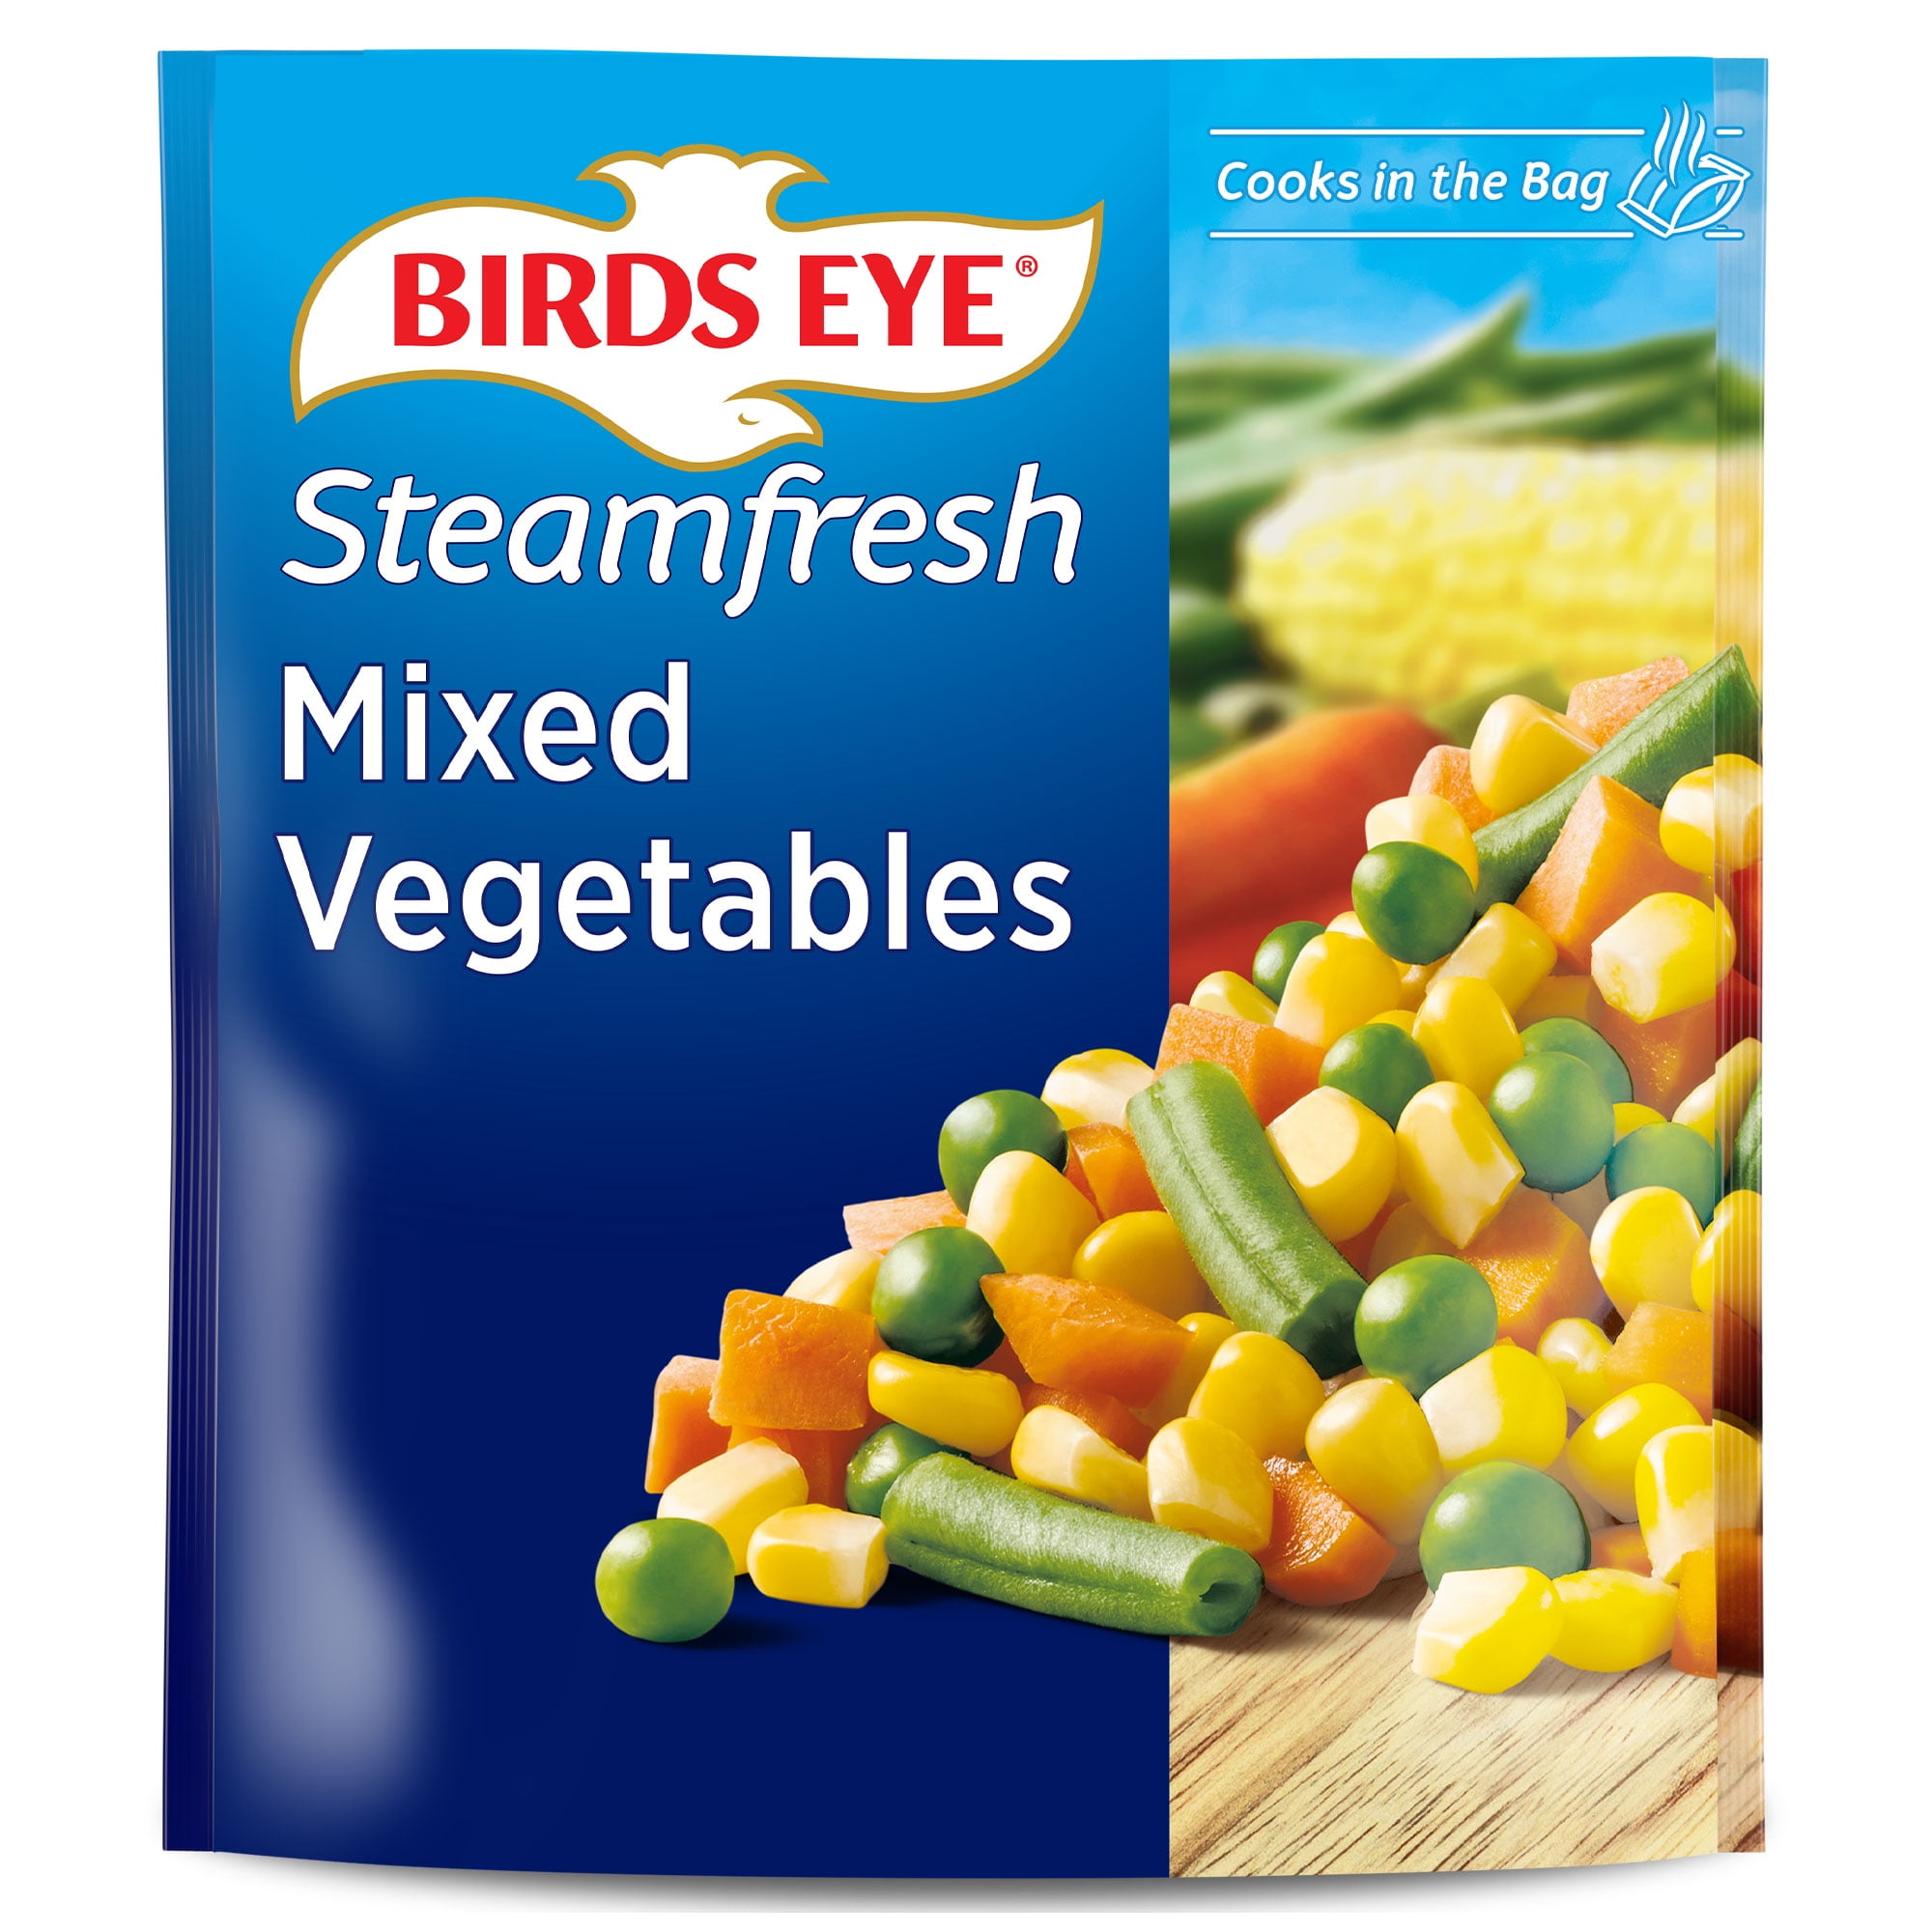 Birds Eye Steamfresh Frozen Mixed Vegetables, 10 oz (Frozen)